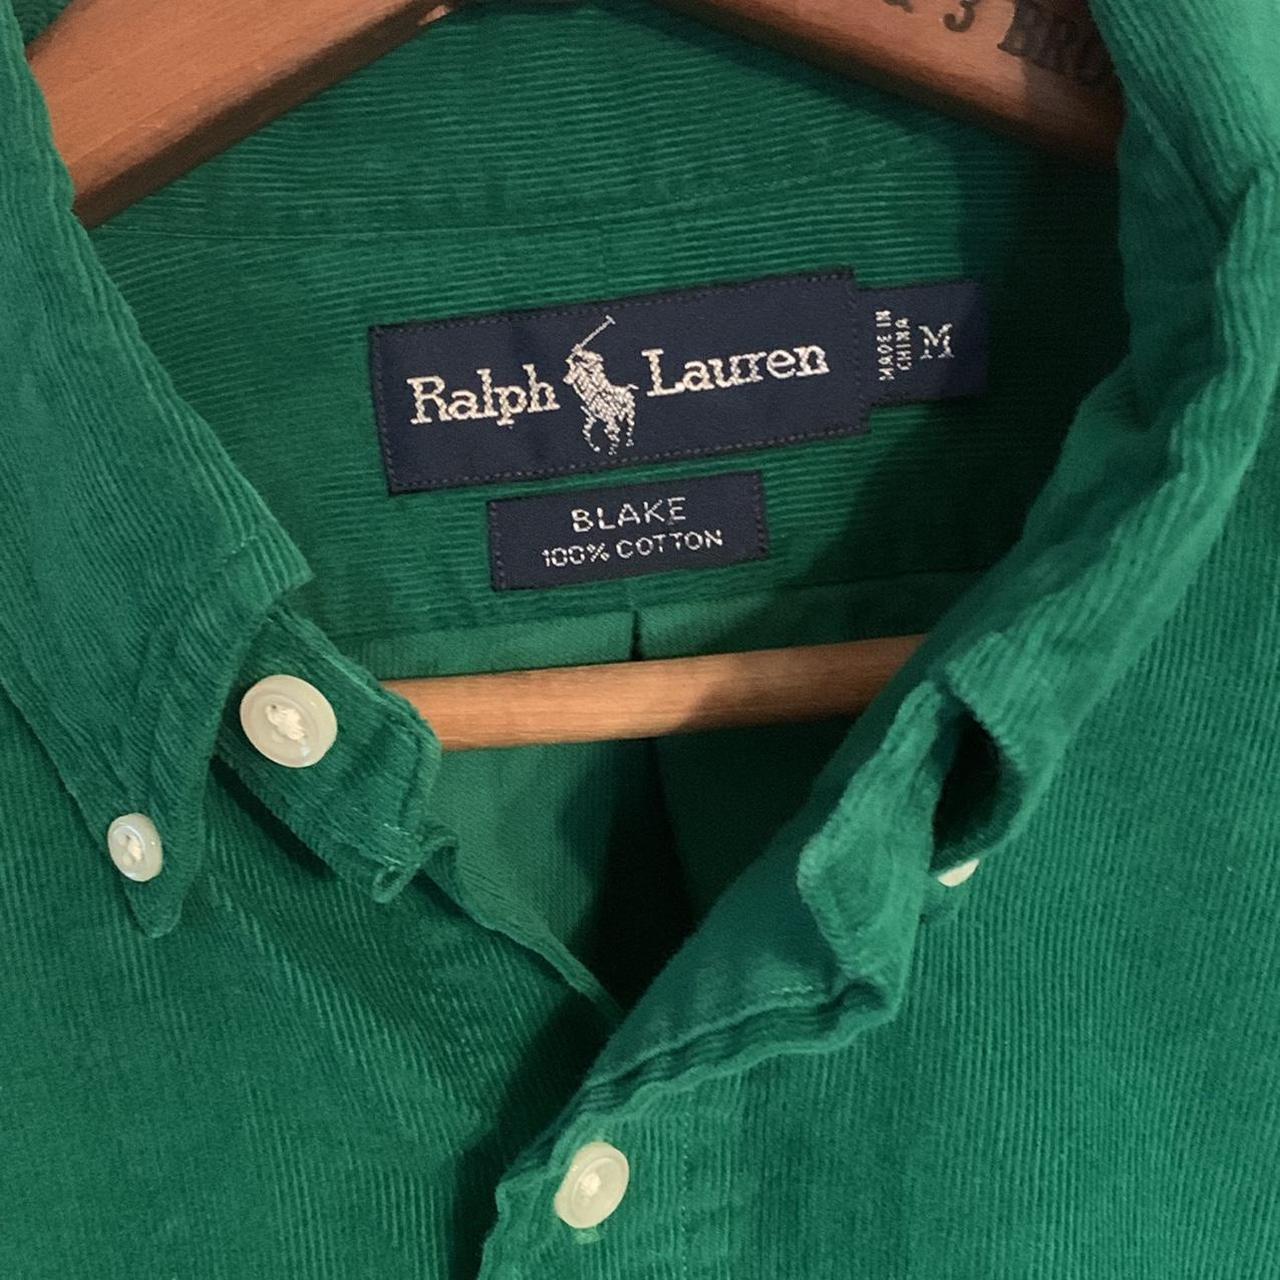 Product Image 3 - Emerald green Ralph Lauren Polo